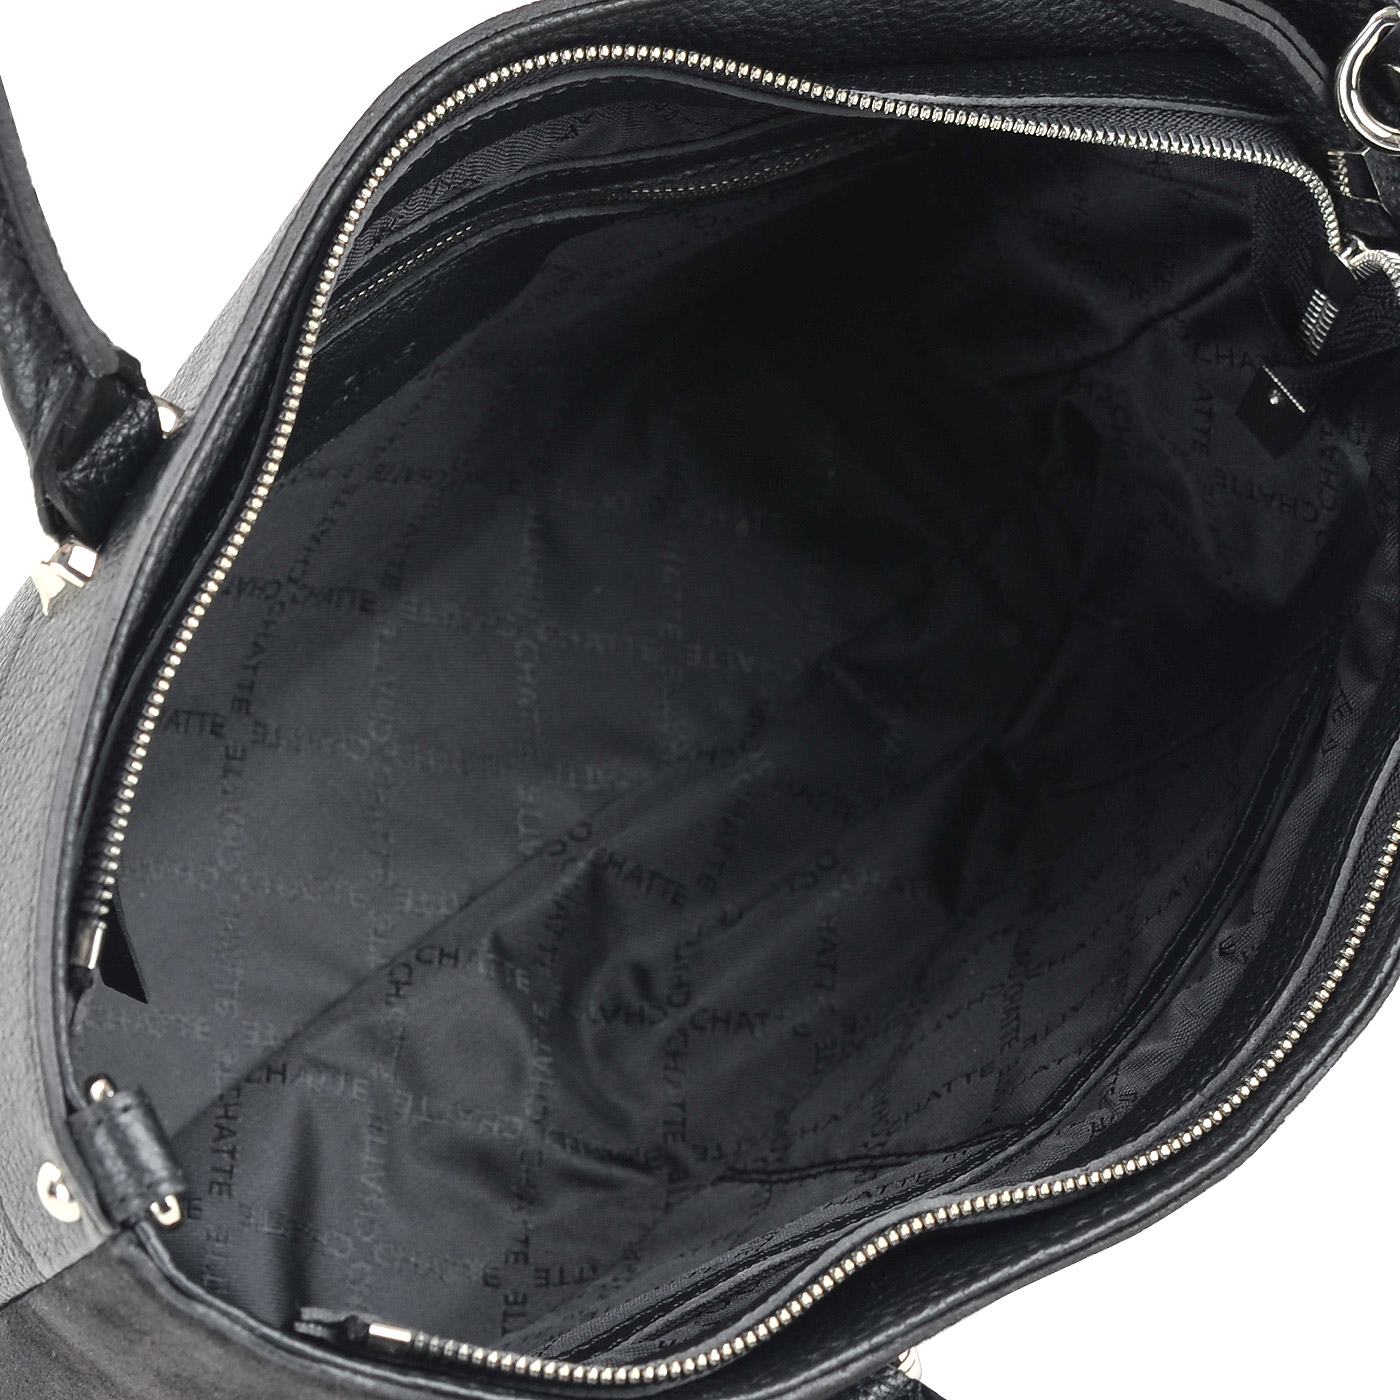 Черная женская сумка со съемным плечевым ремешком Chatte 